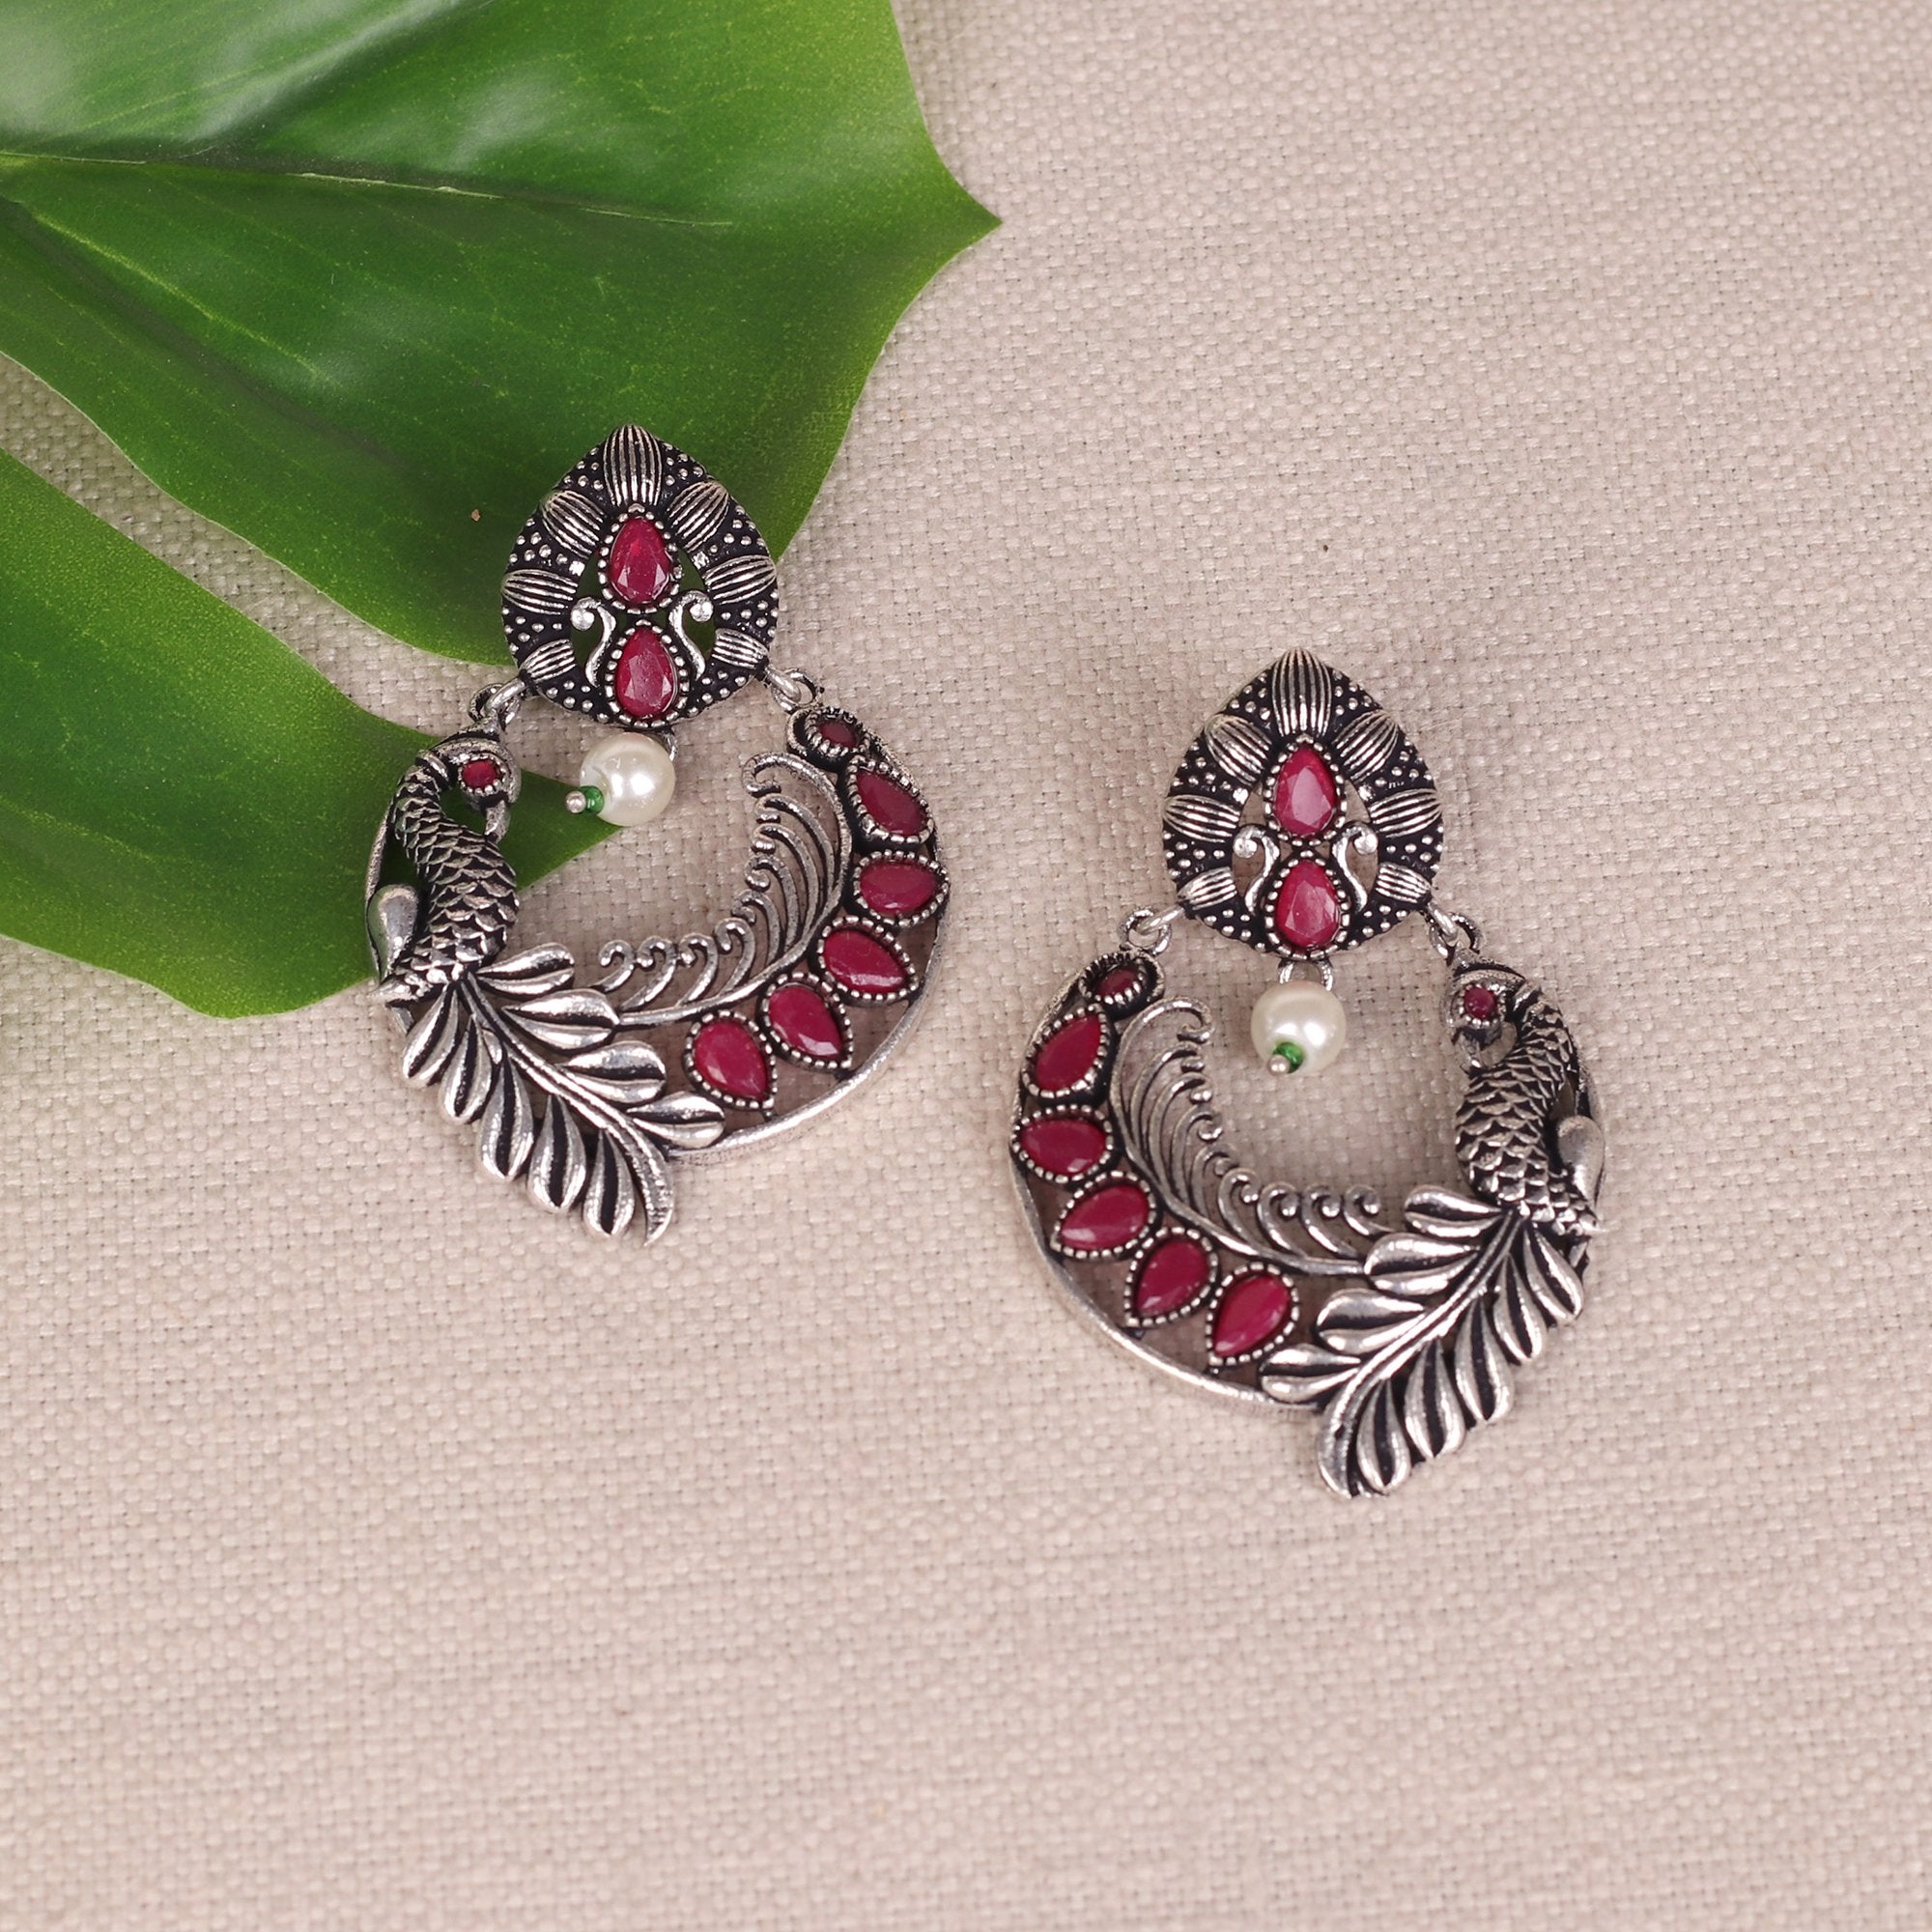 Bird Motif German Silver Earrings With Red Stones